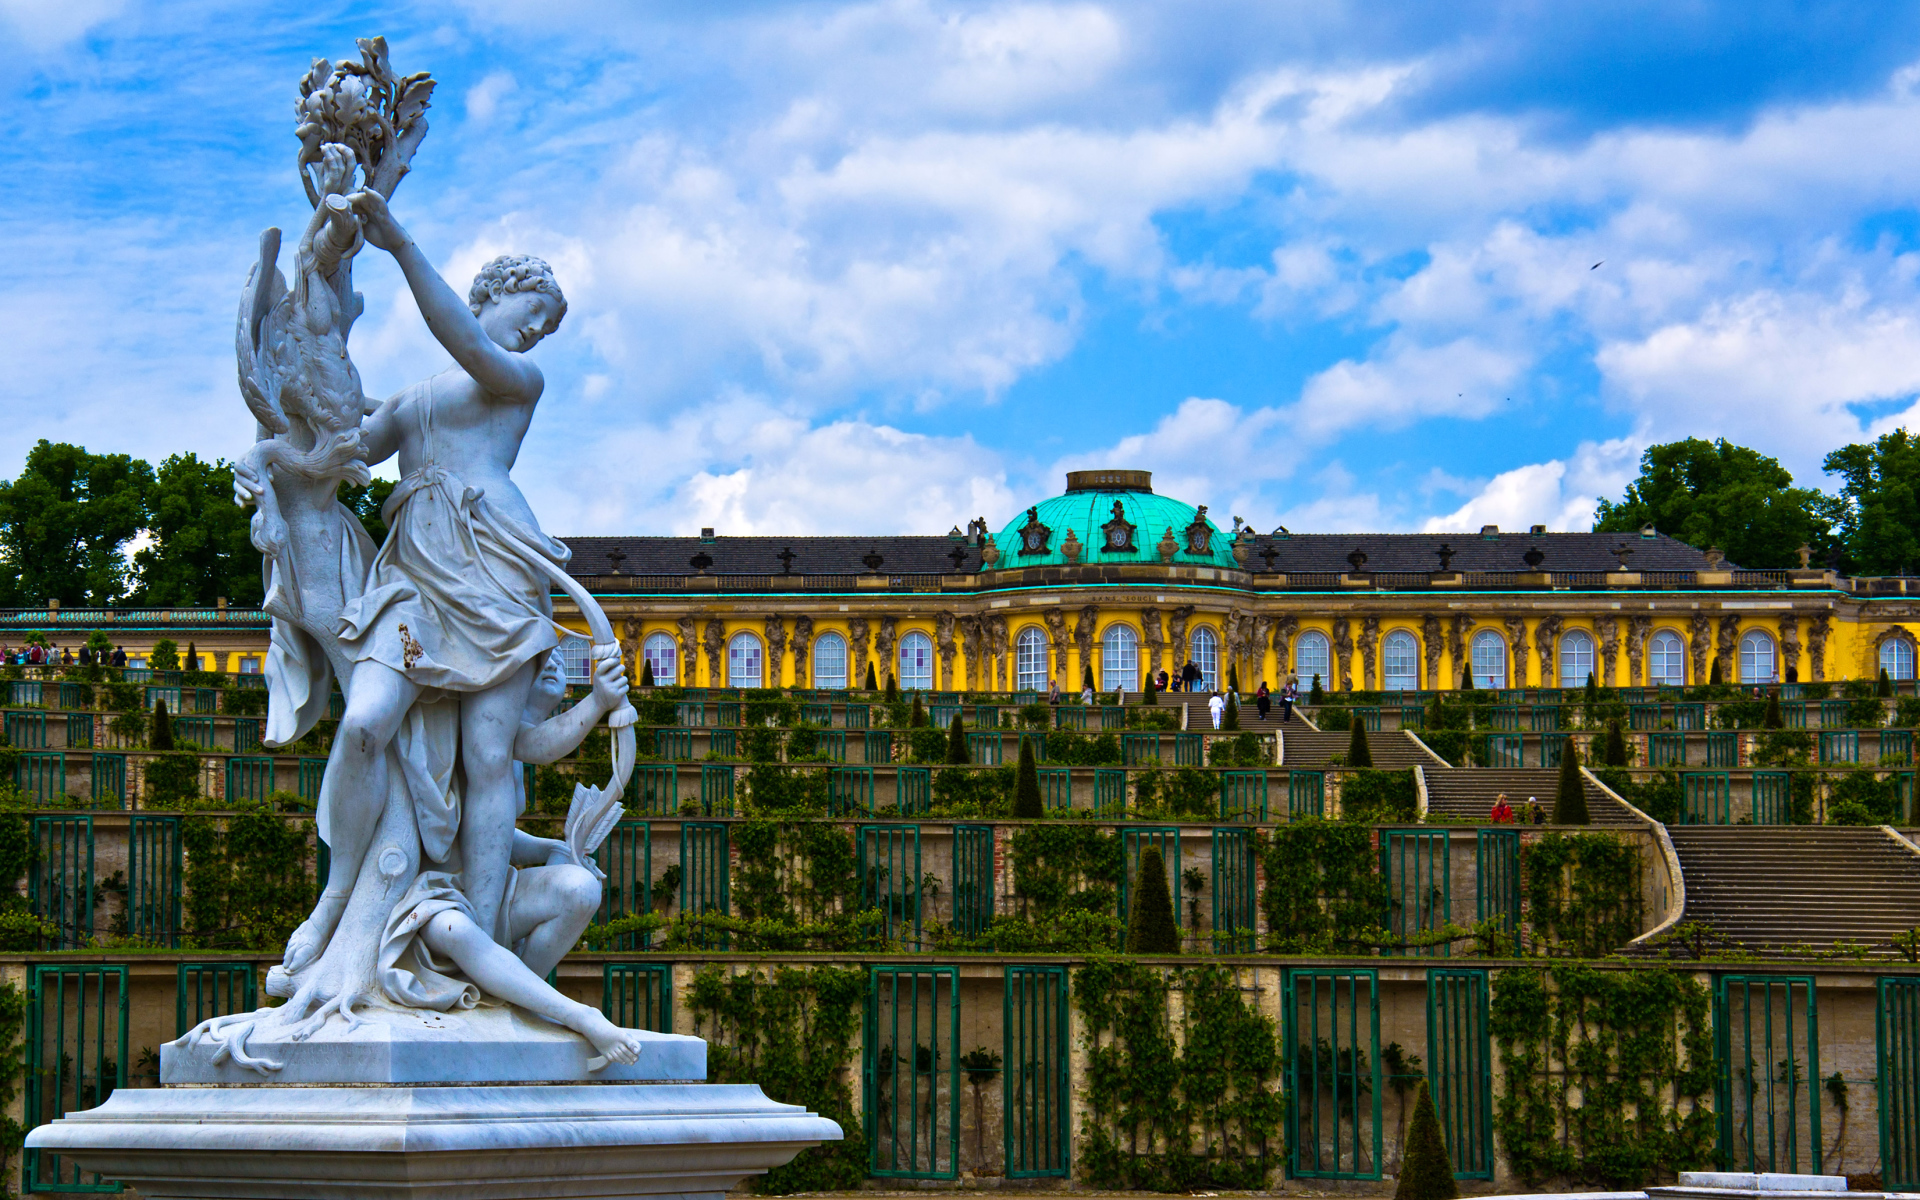 Скульптура у дворца Сан-Суси, Потсдам. Германия 